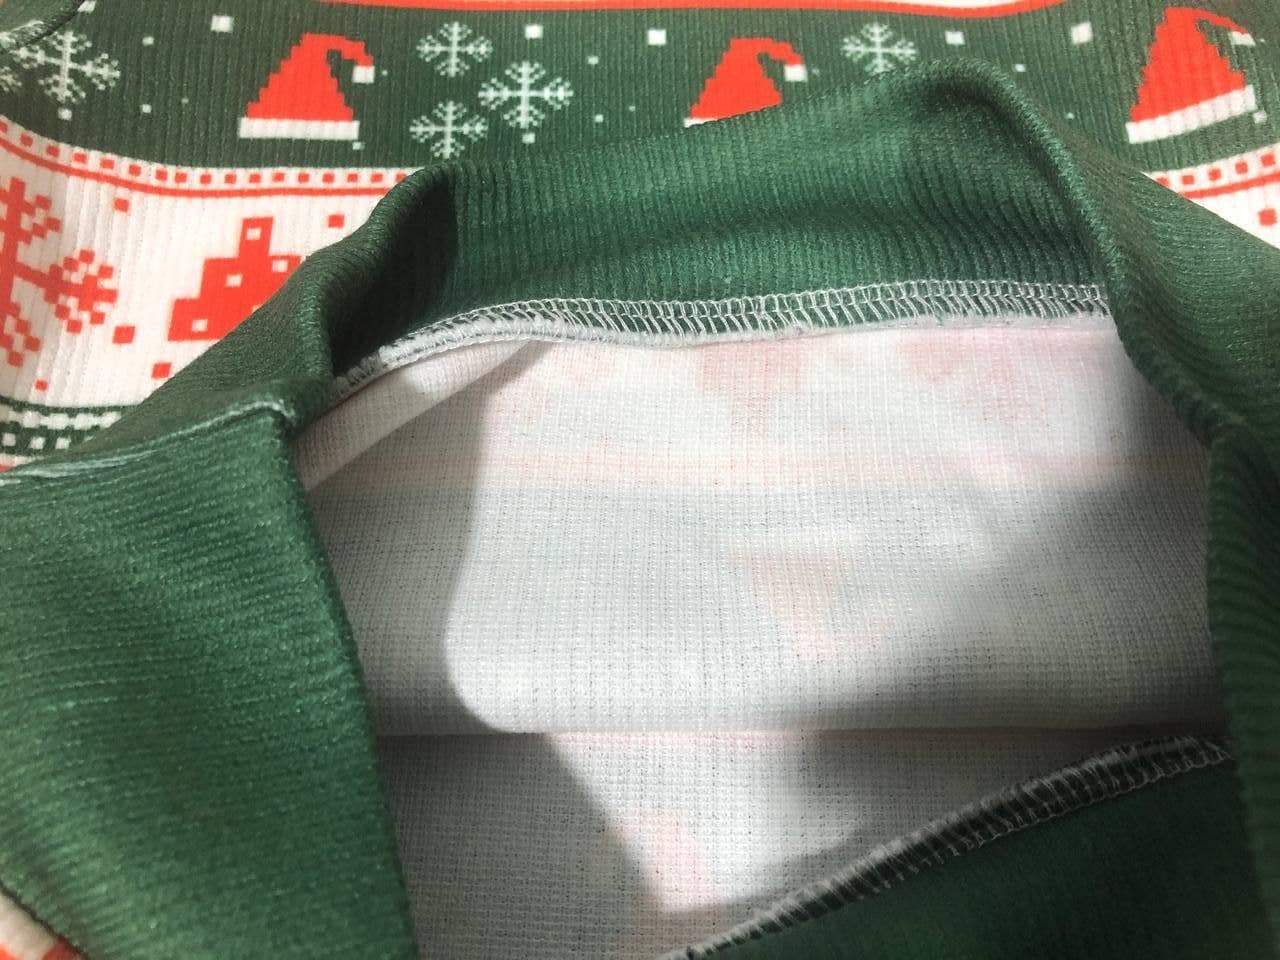 Mikasa Ackerman Attack on Titan Anime Ugly Christmas Sweater New Design